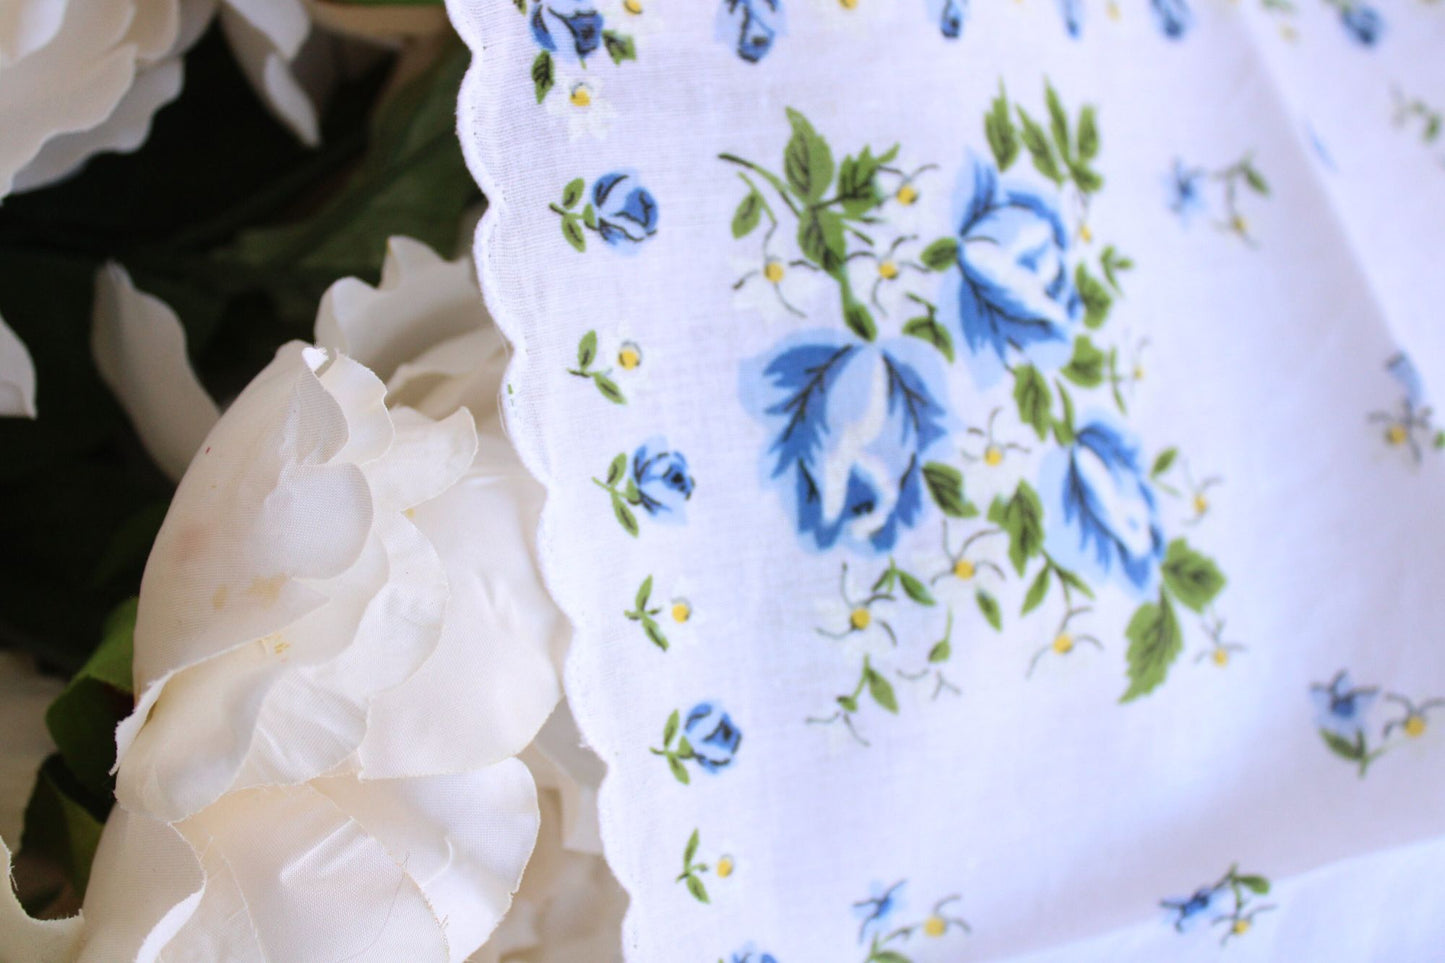 Vintage Blue Rose Flower Print Cotton Hanky